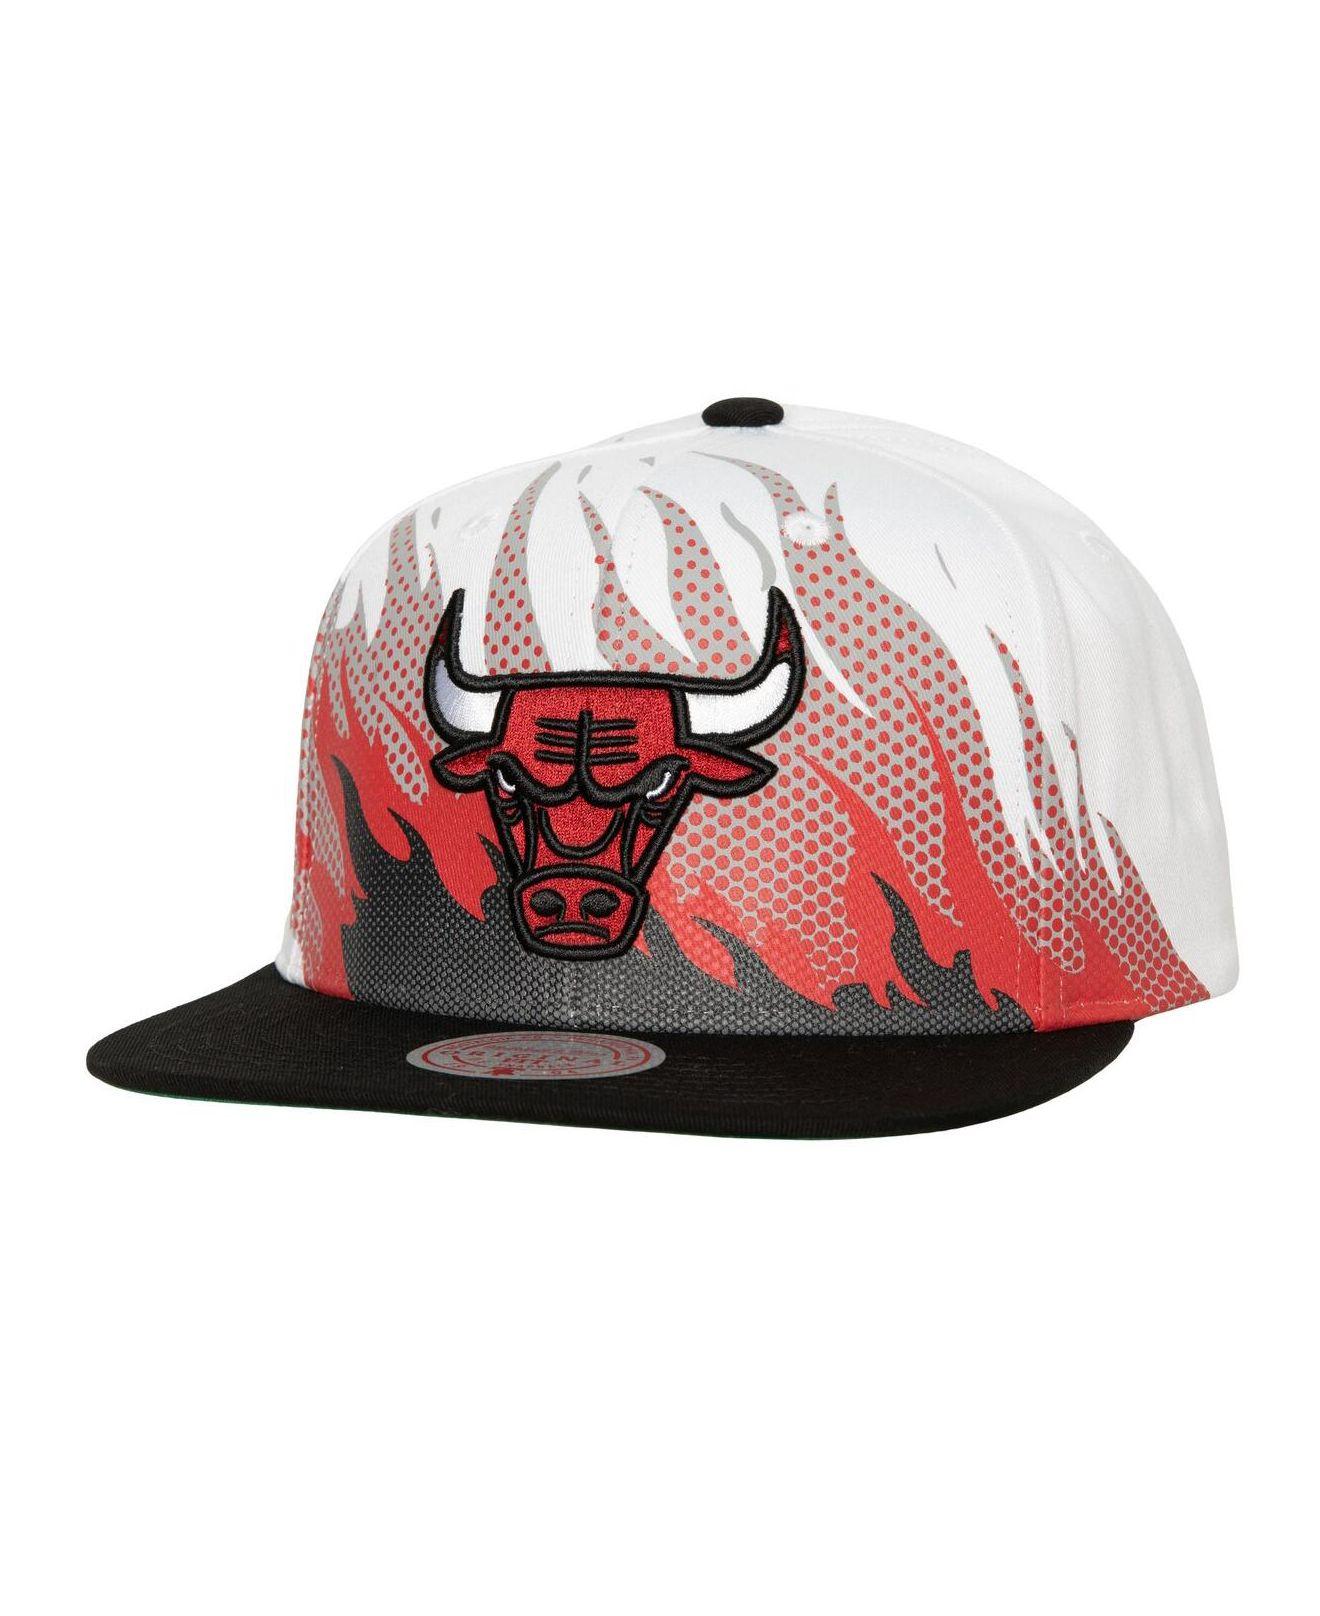 Mitchell & Ness NBA 50th Anniversary Chicago Bulls Snapback Hat